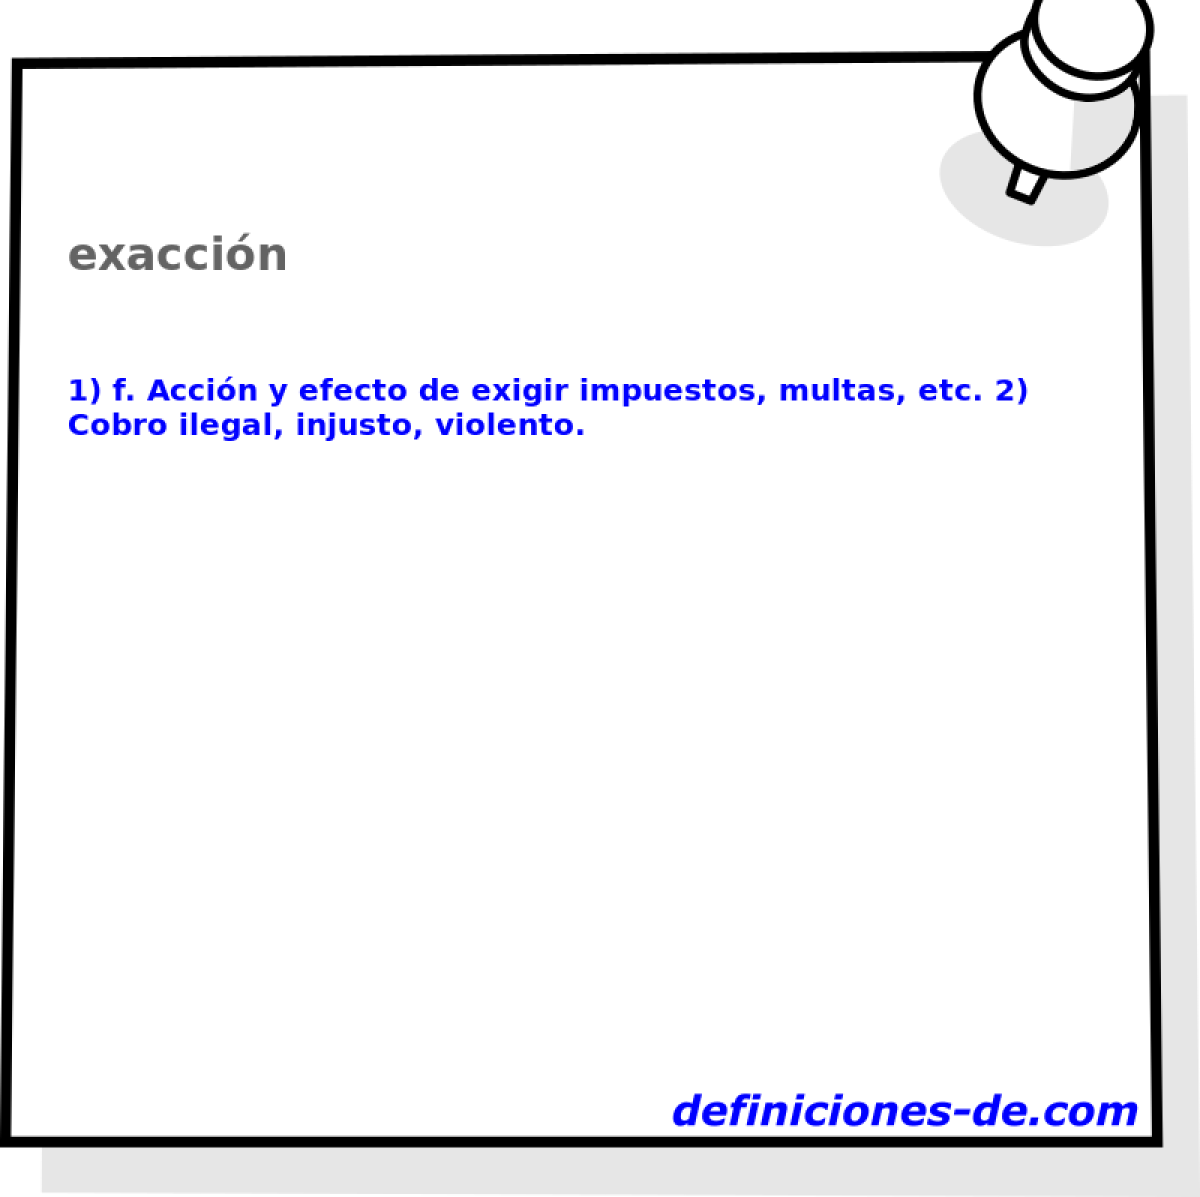 exaccin 